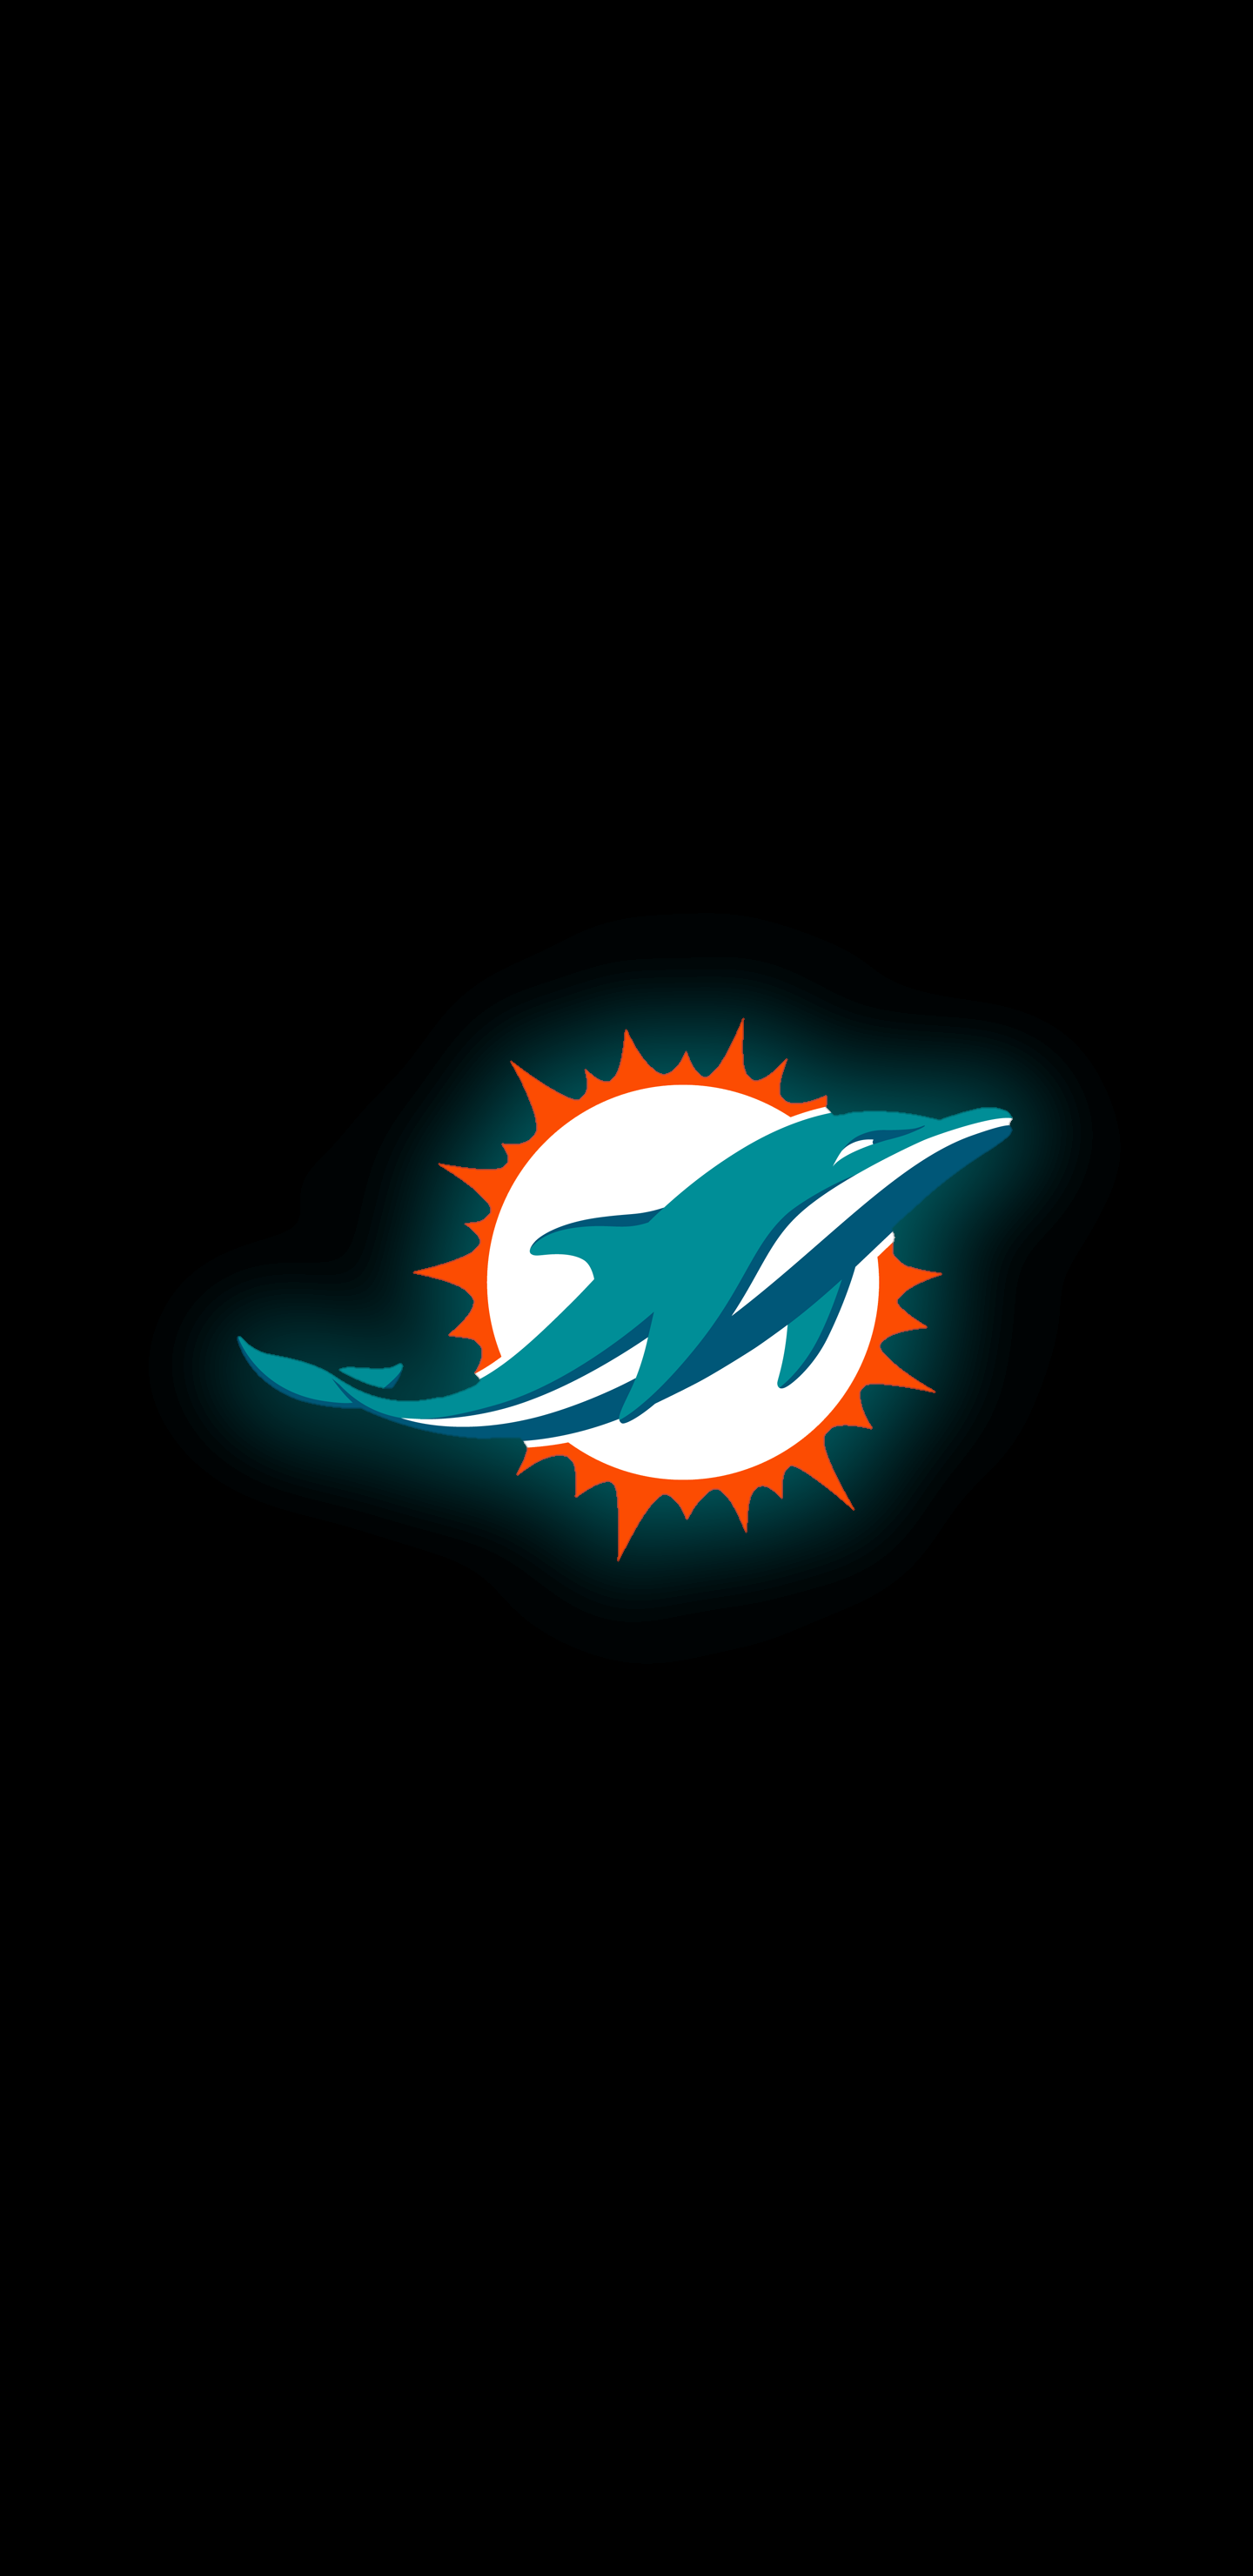 Miami Dolphins Logo In Orange Shades Background 4K HD Miami Dolphins  Wallpapers | HD Wallpapers | ID #85348